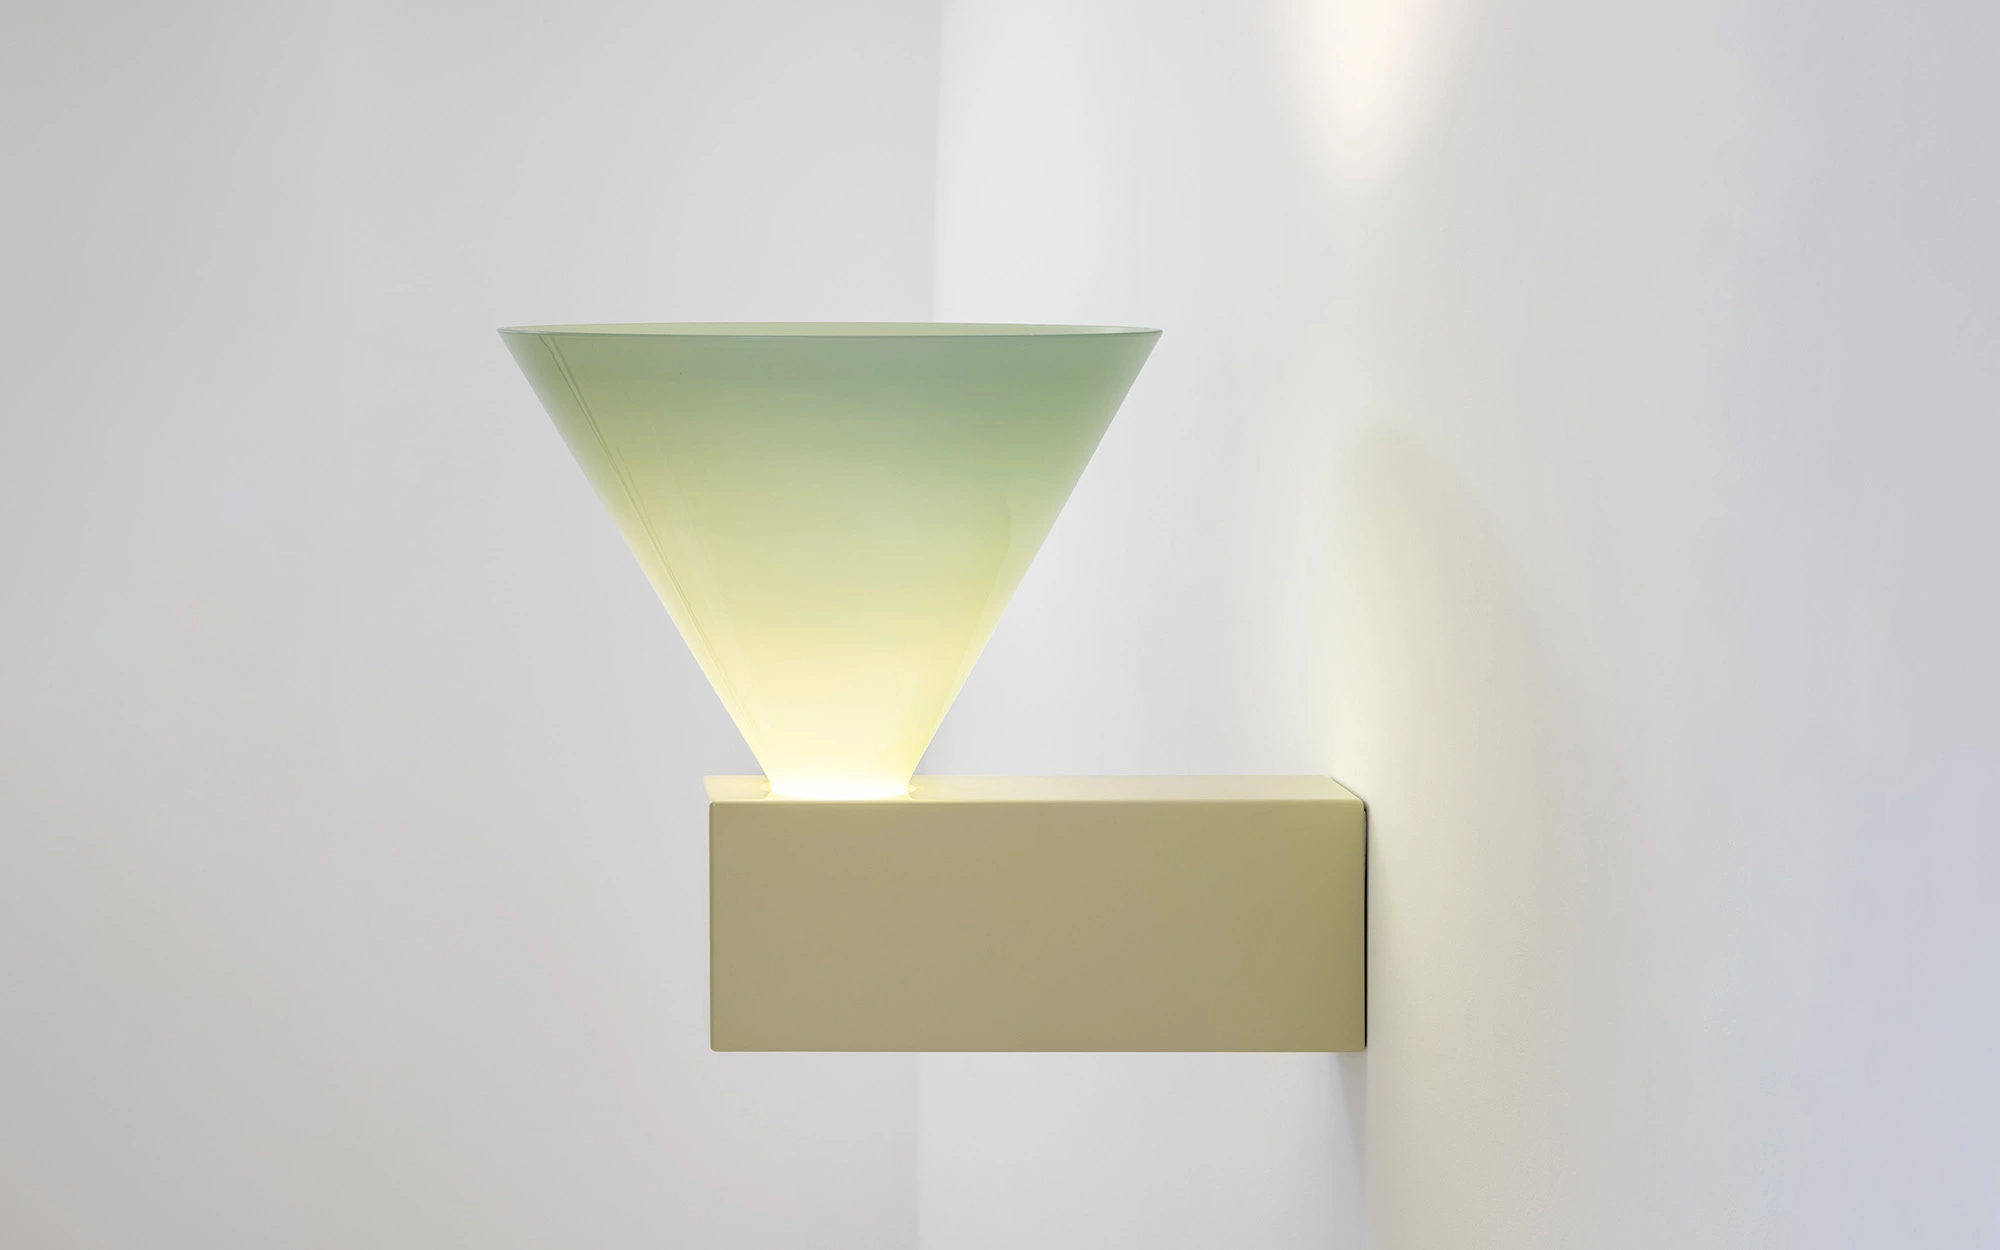 Signal W MONOCHROMATIC - Edward Barber & Jay Osgerby - wall-light - Galerie kreo